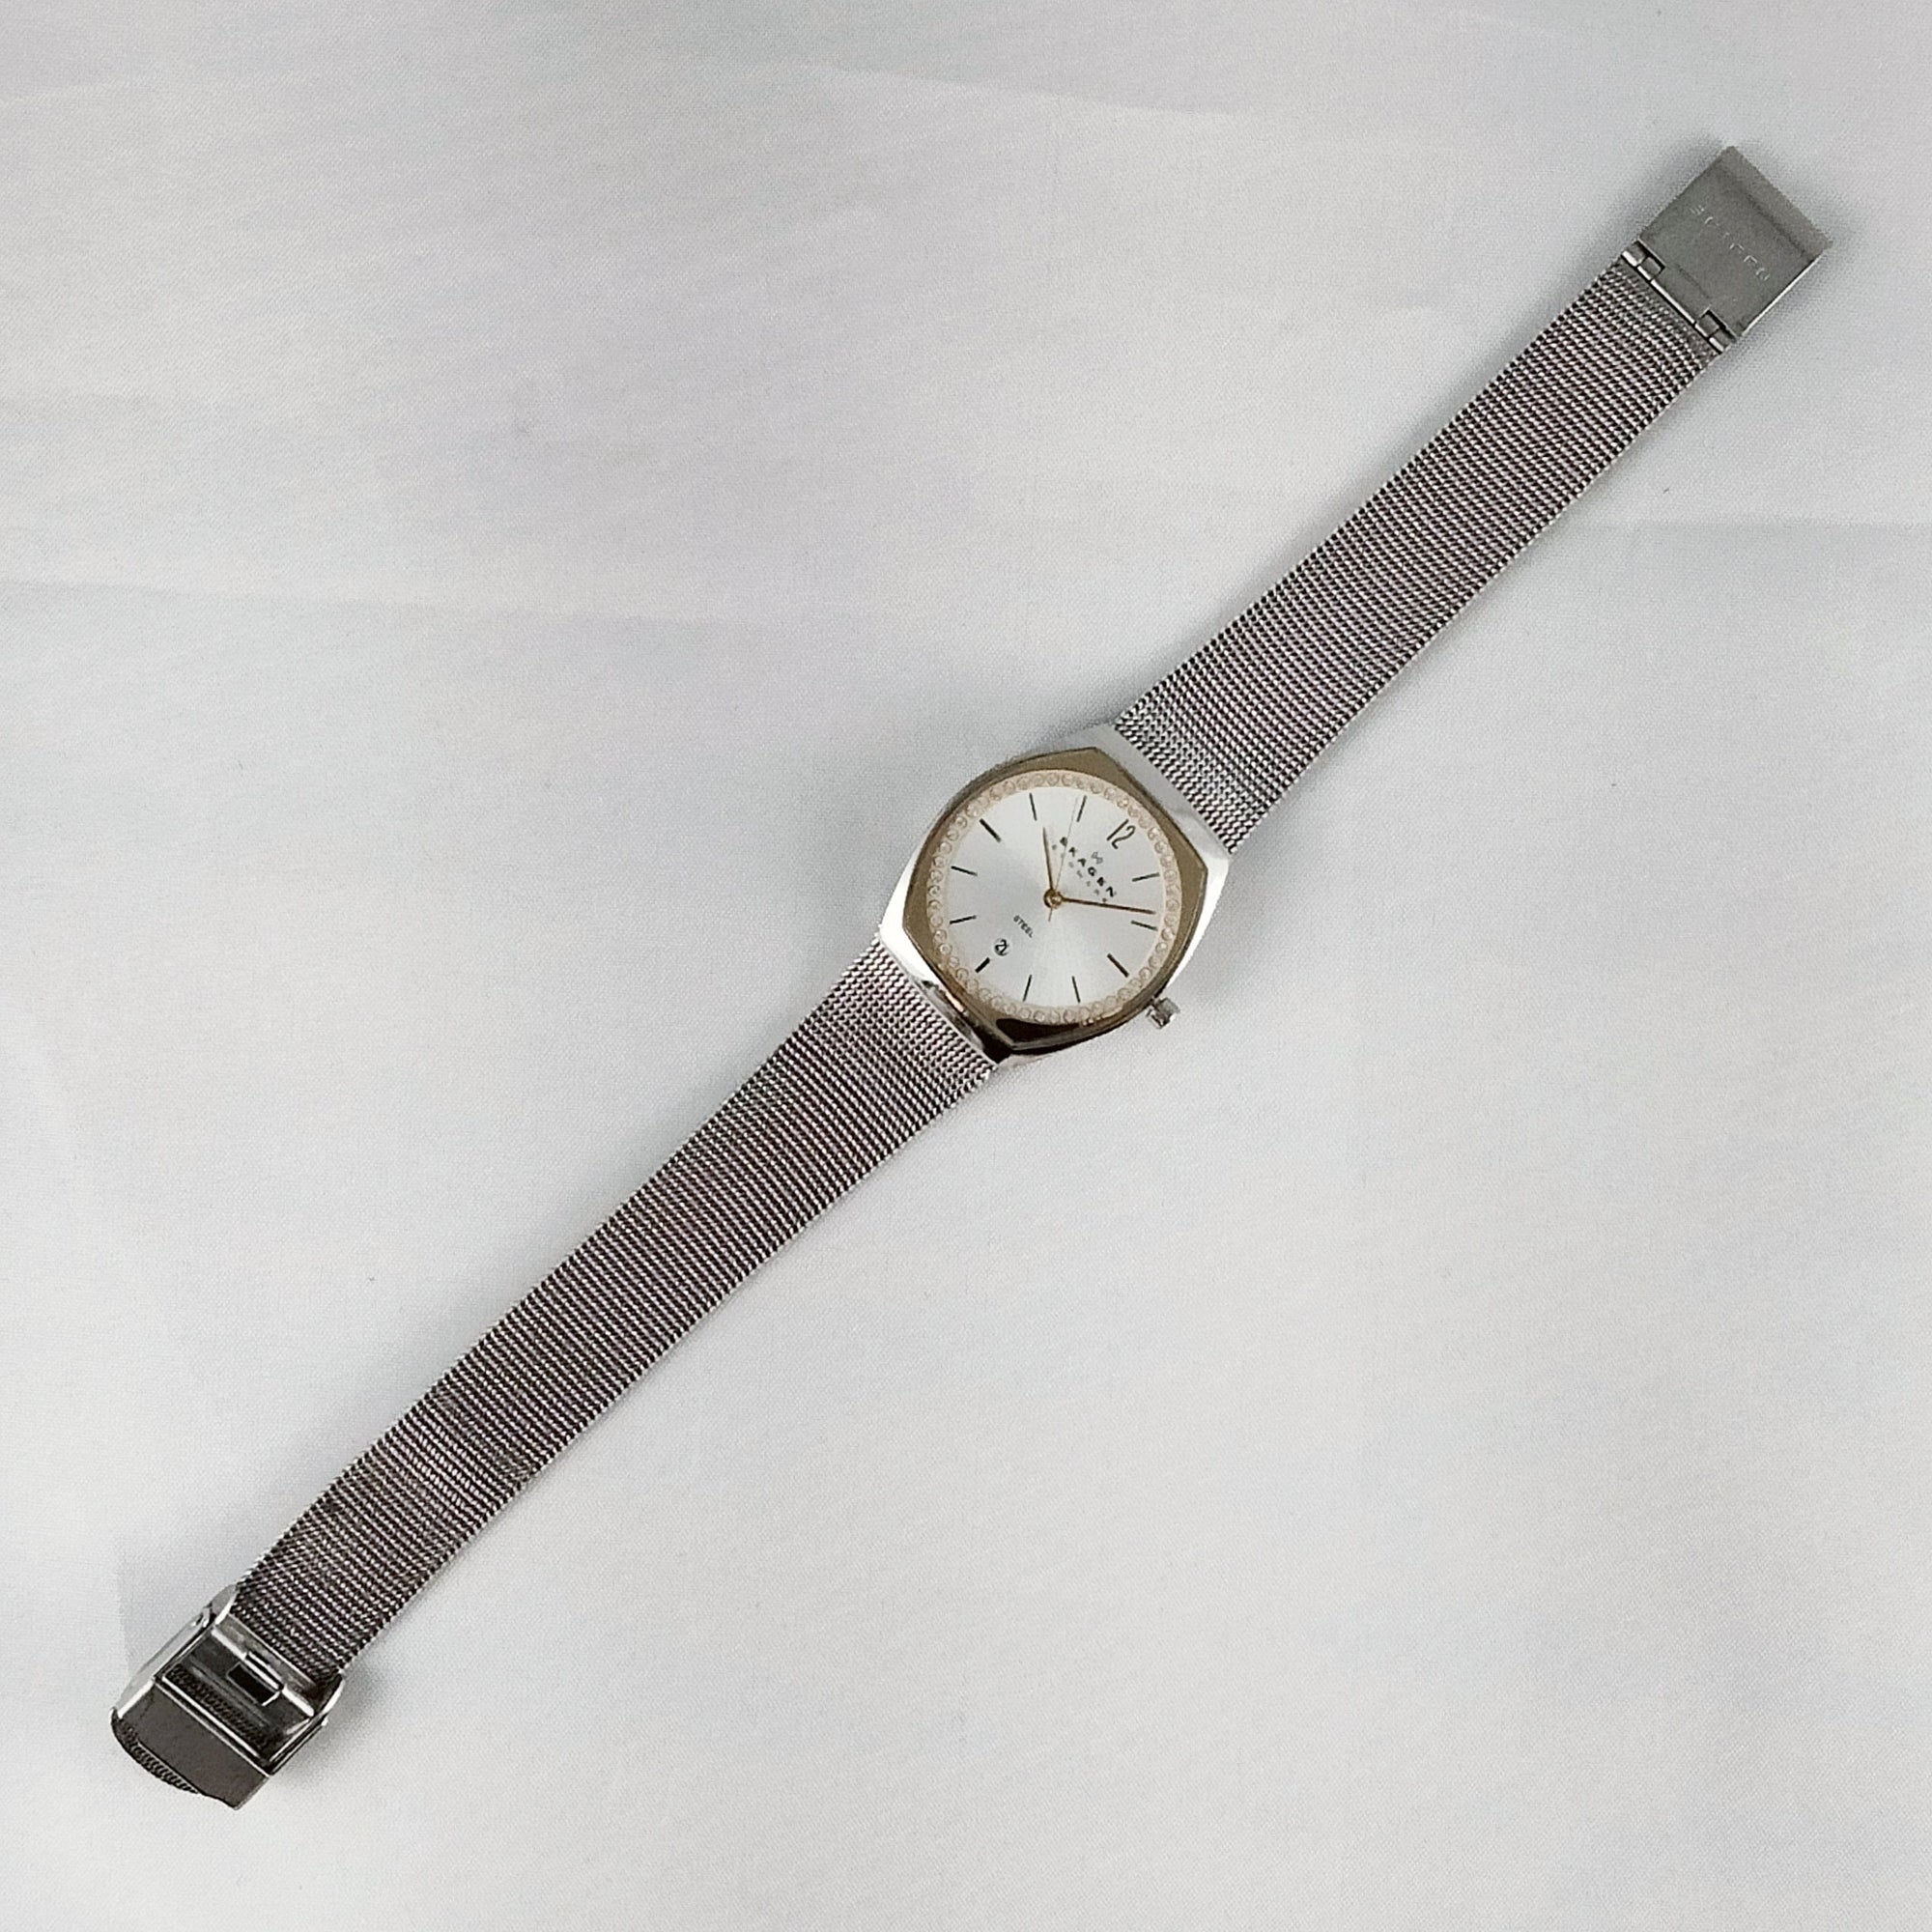 I Like Mikes Mid Century Modern Watches Skagen Stainless Steel Women's Watch, Jewel Details, Date Window, Mesh Strap